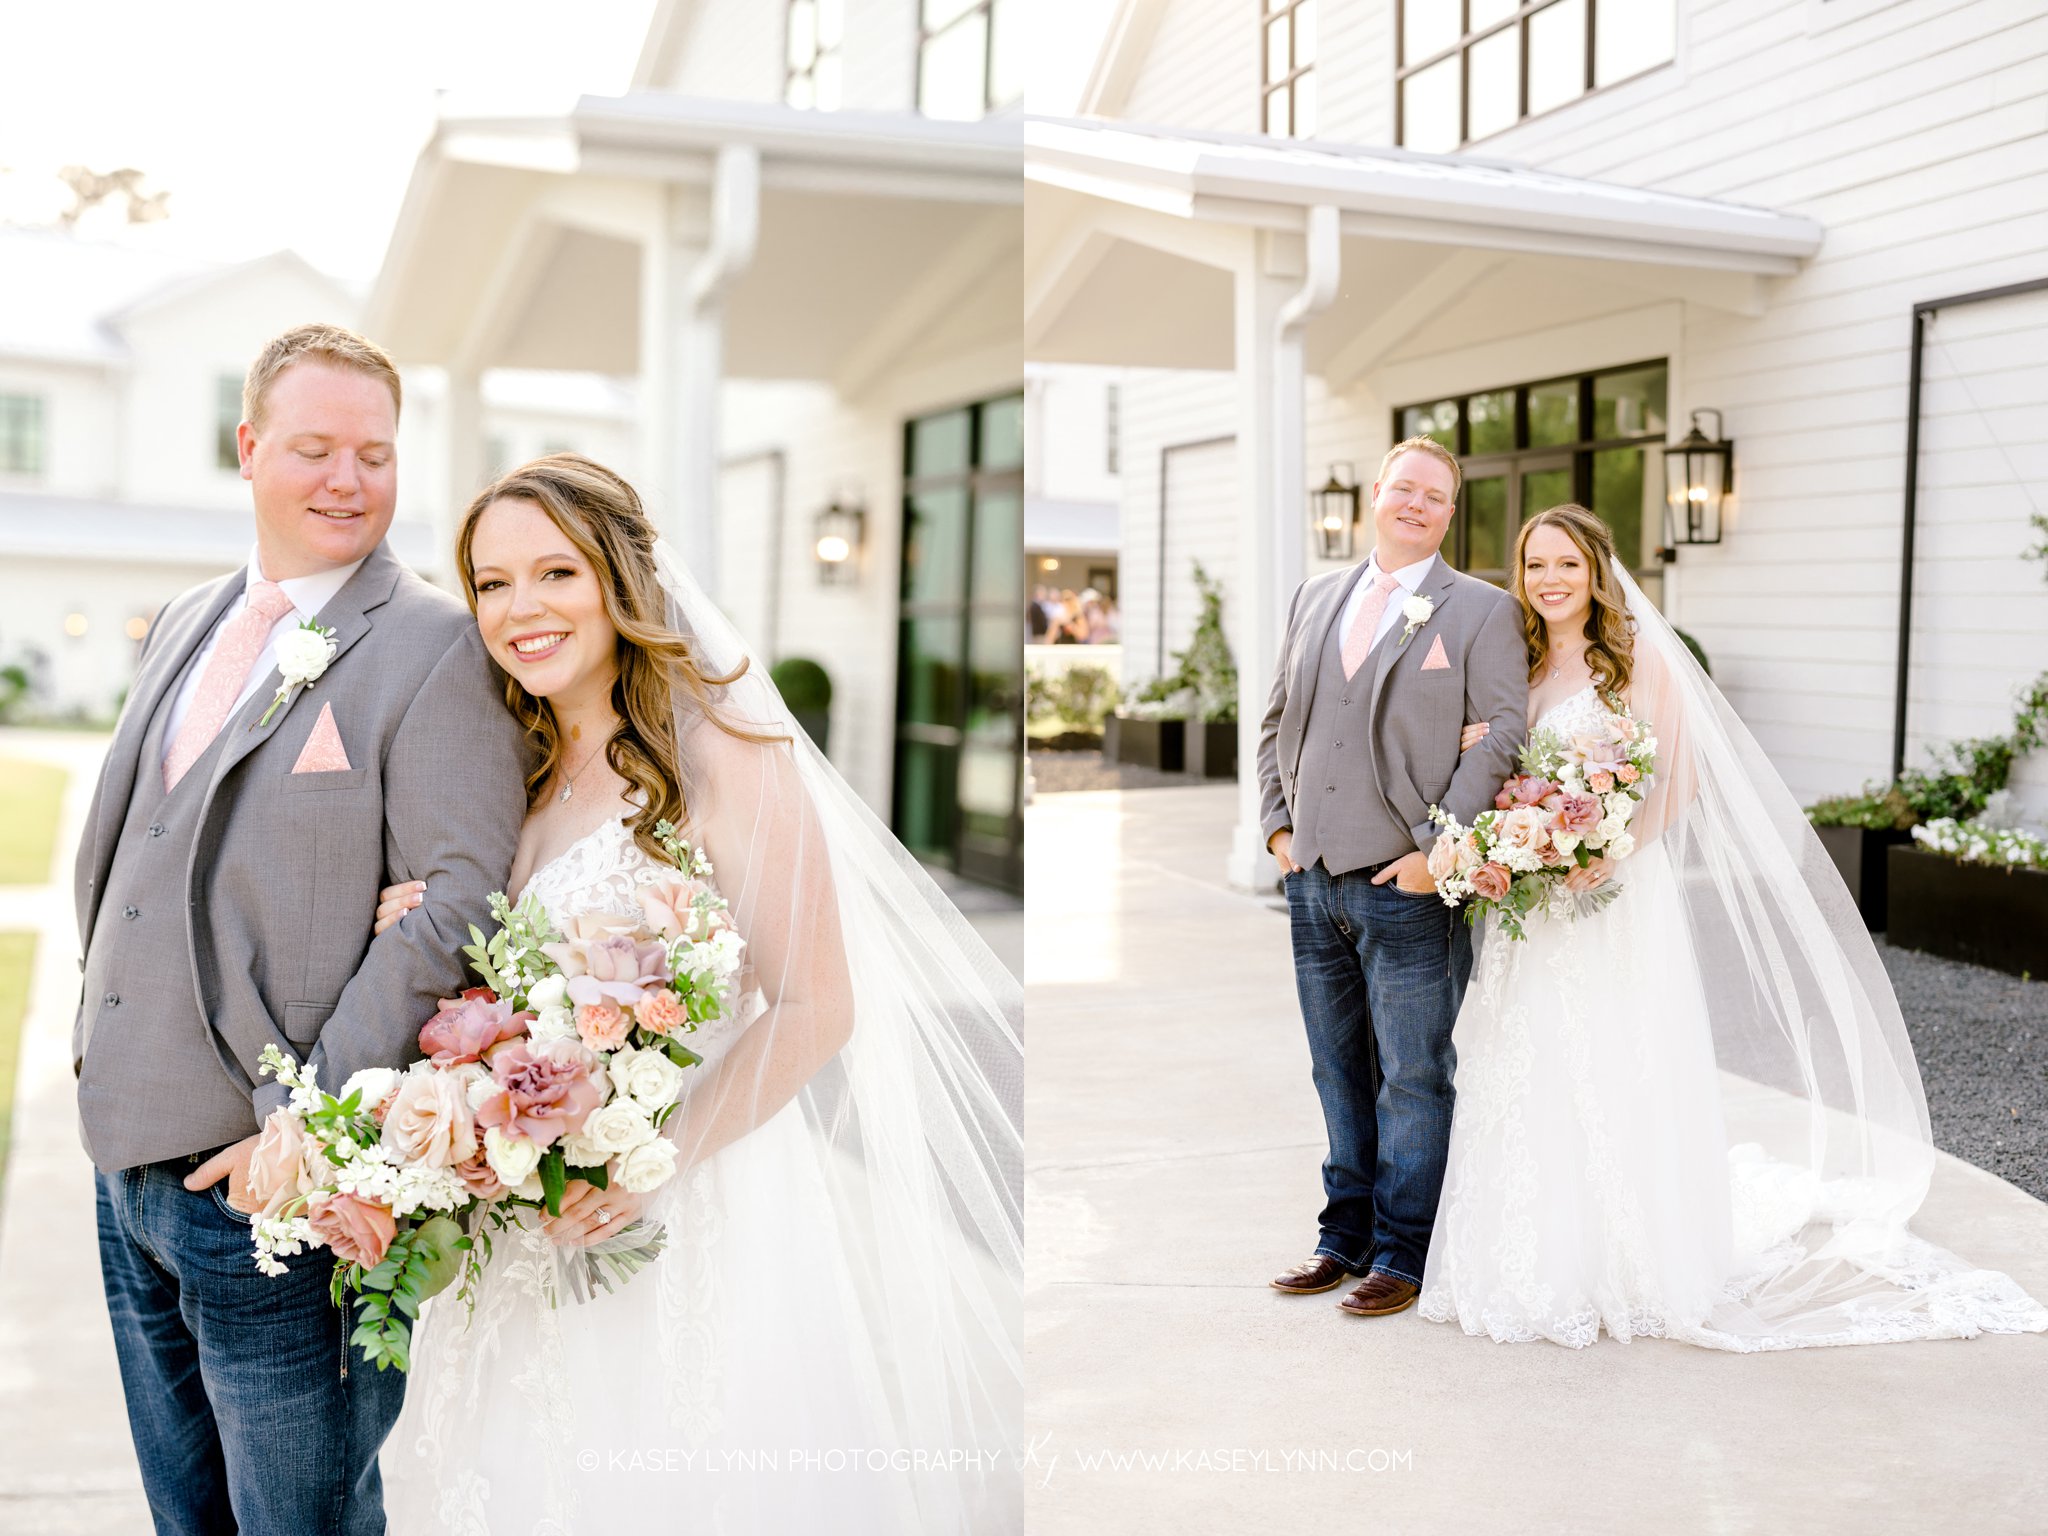 Houston Wedding / Kasey Lynn Photography